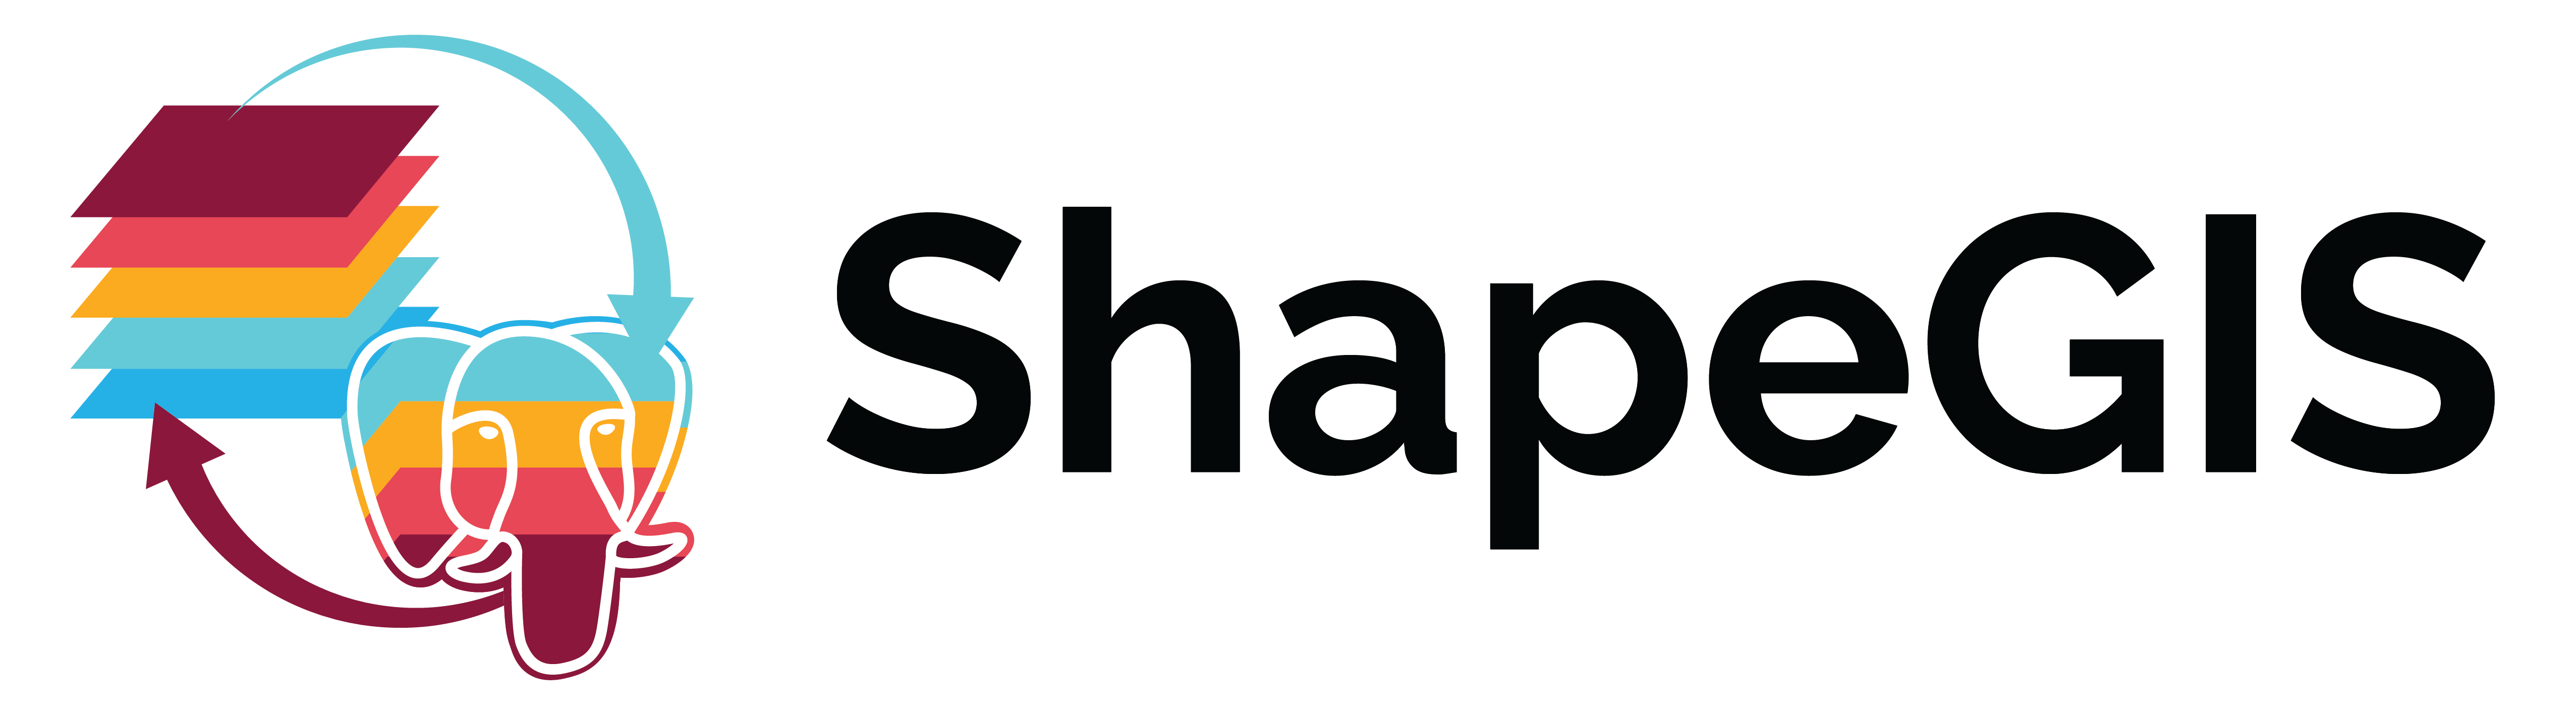 shapegis-logo.png